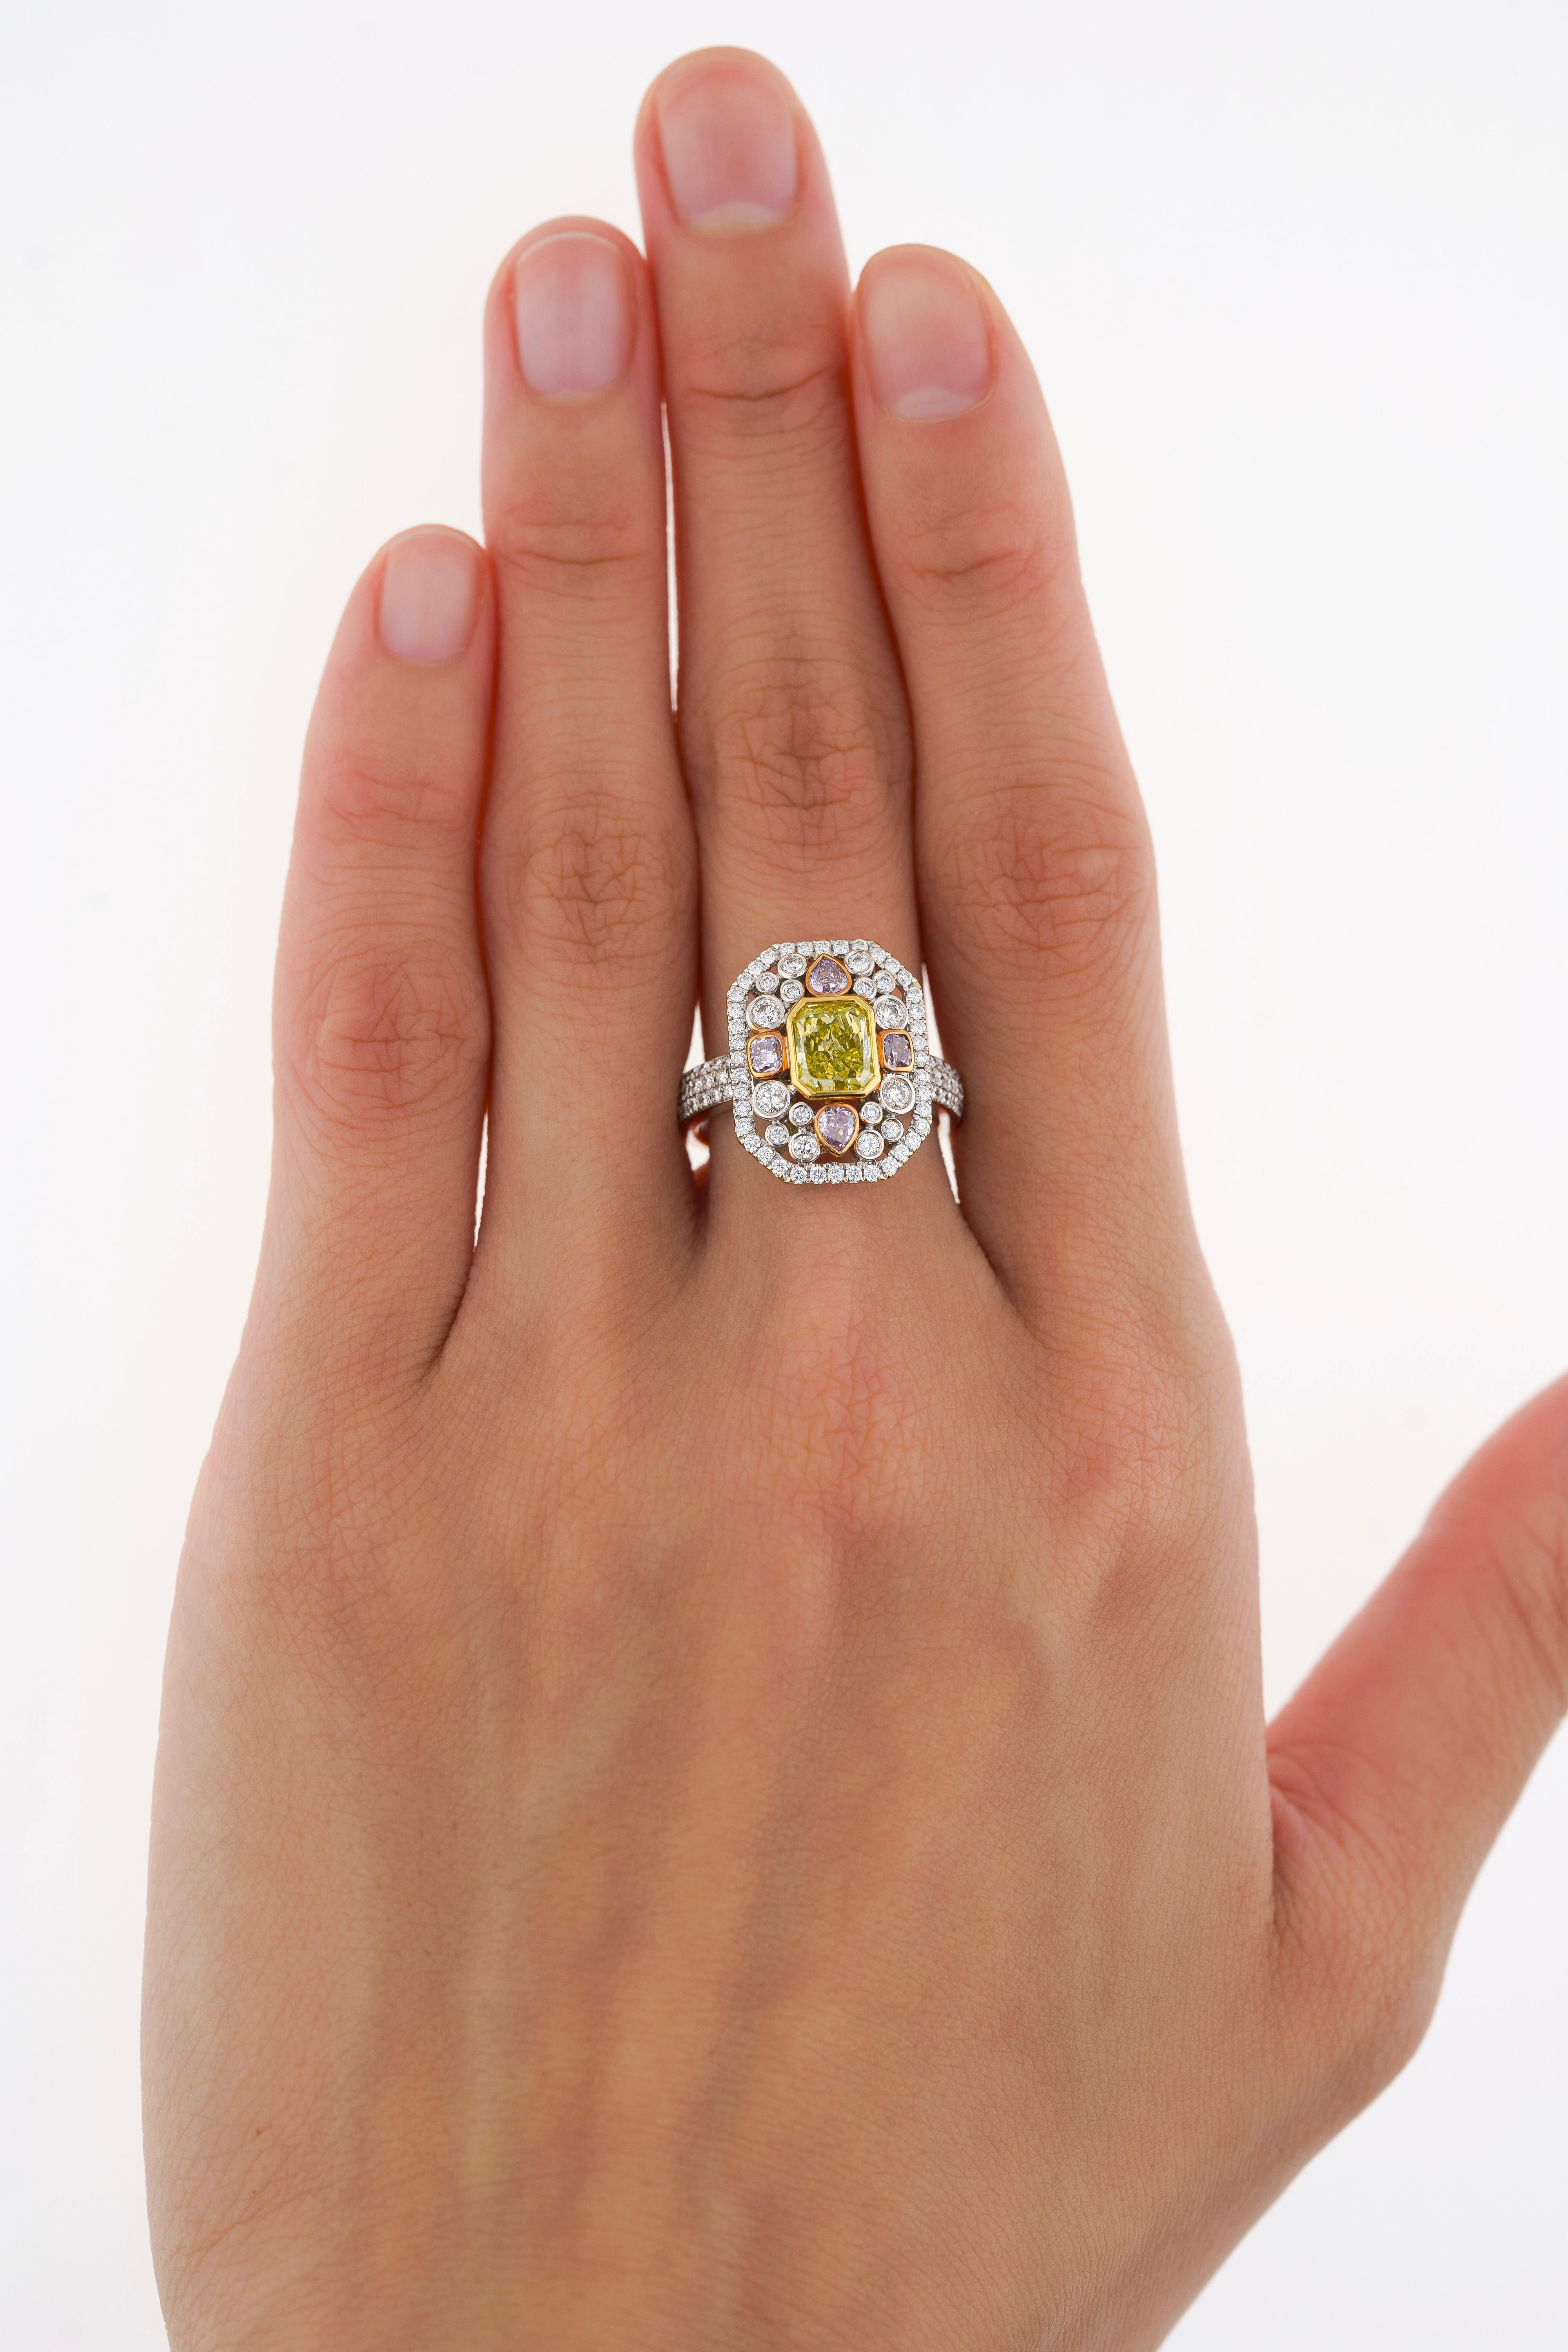 GIA Certified 1.15 Carat Radiant Cut Fancy Intense Yellowish Green Diamond Ring For Sale 3